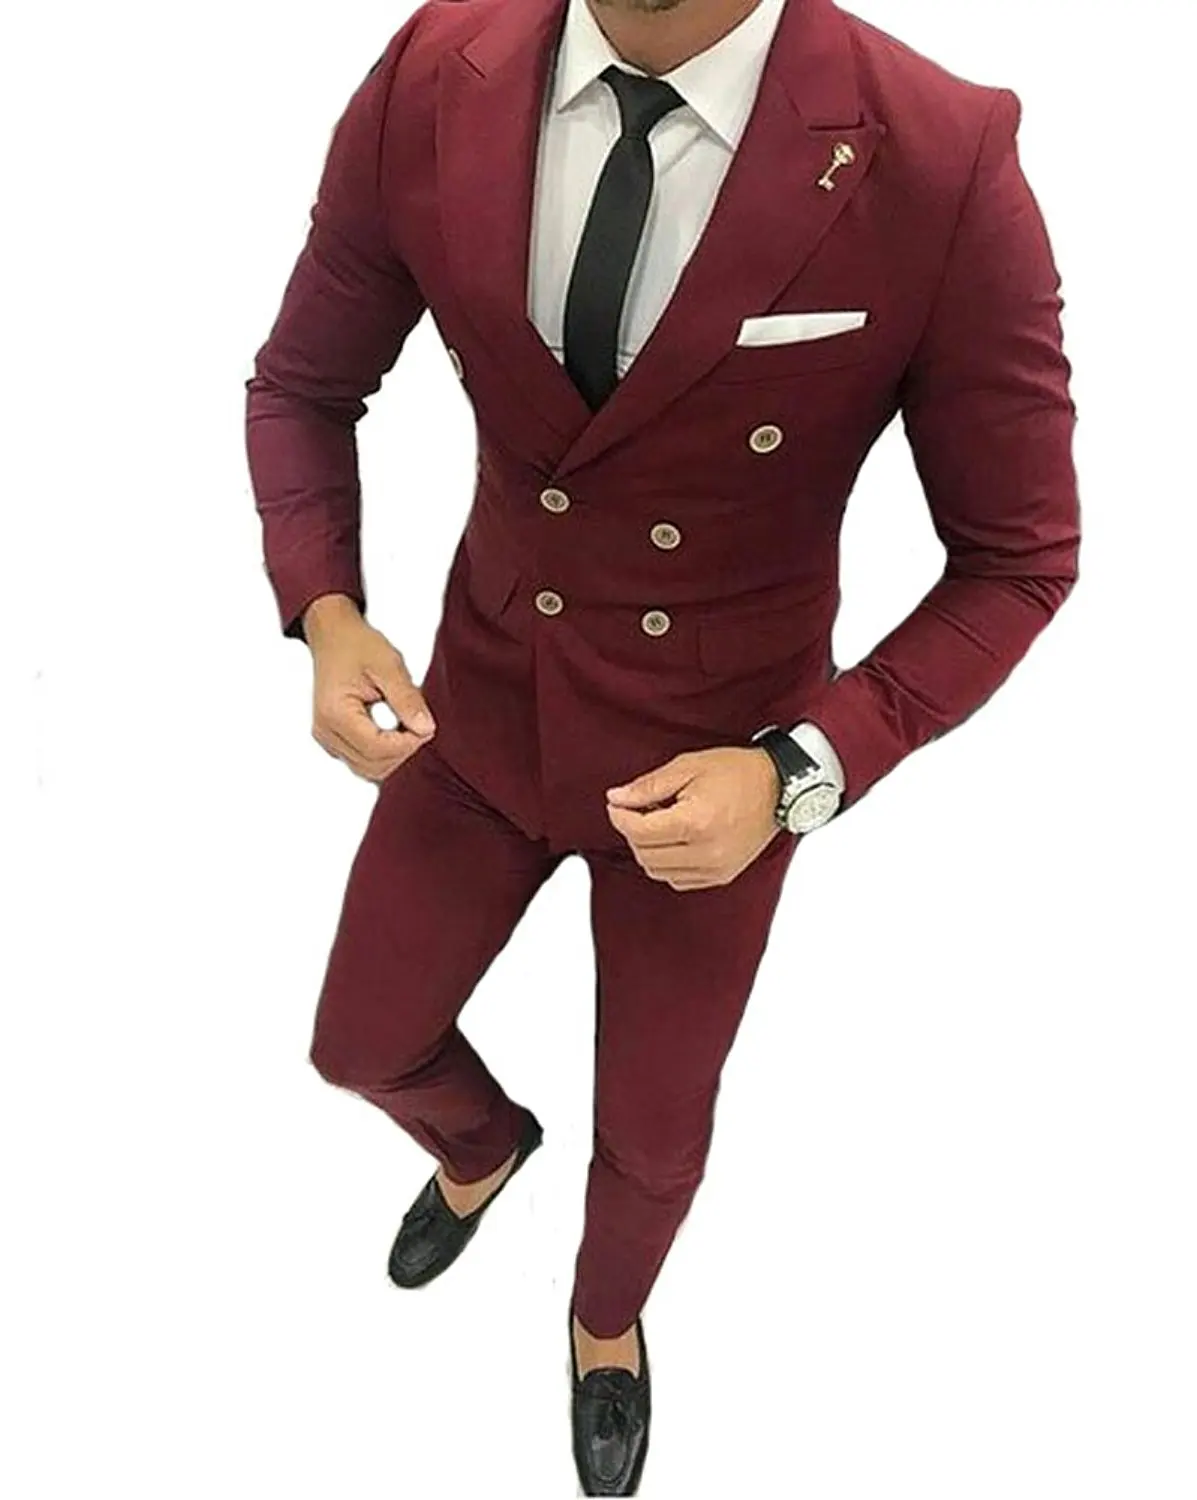 Cheap Burgundy Suit Jacket For Men, find Burgundy Suit Jacket For Men ...